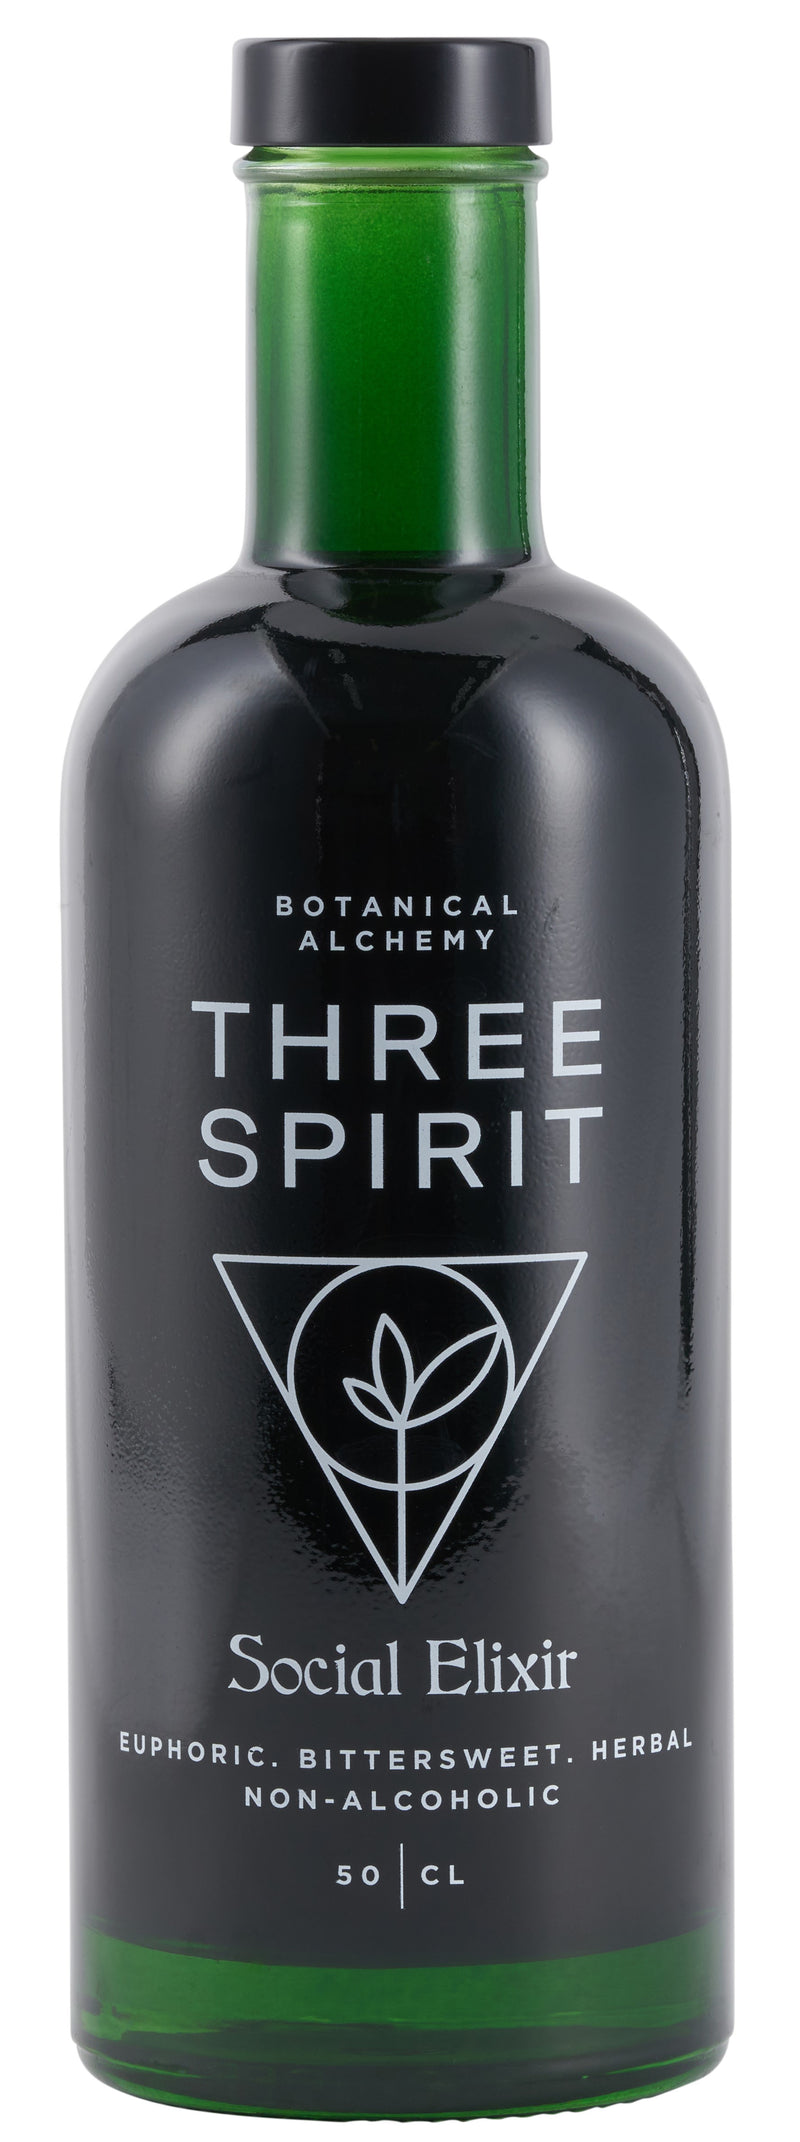 Three Spirit Social Elixir 50cl